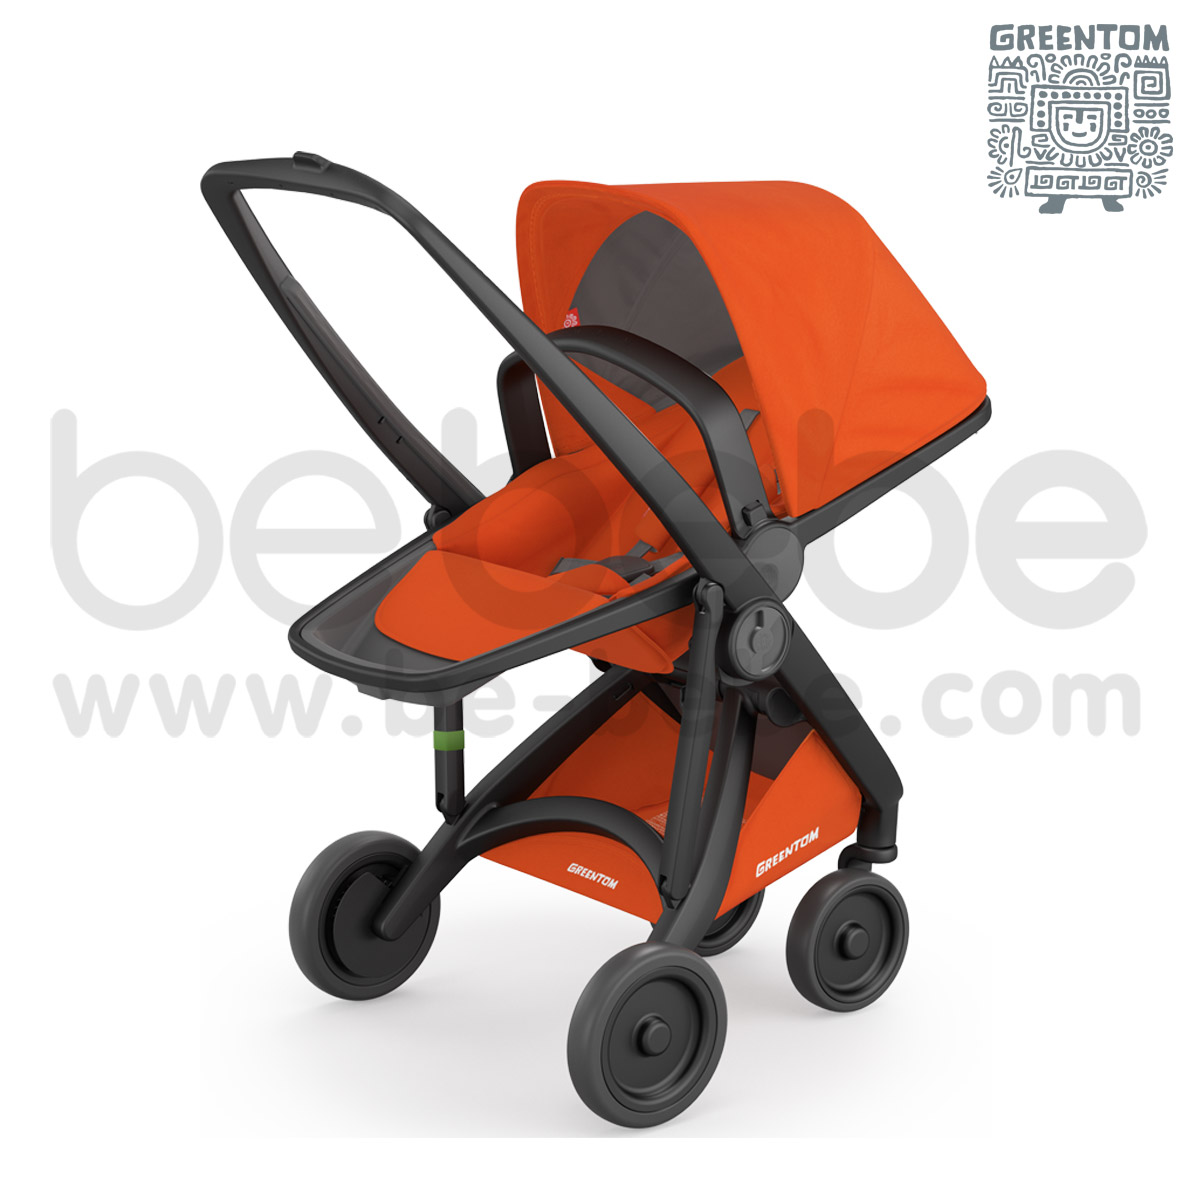 Greentom : Revesible Balck Frame Stroller - Orange 